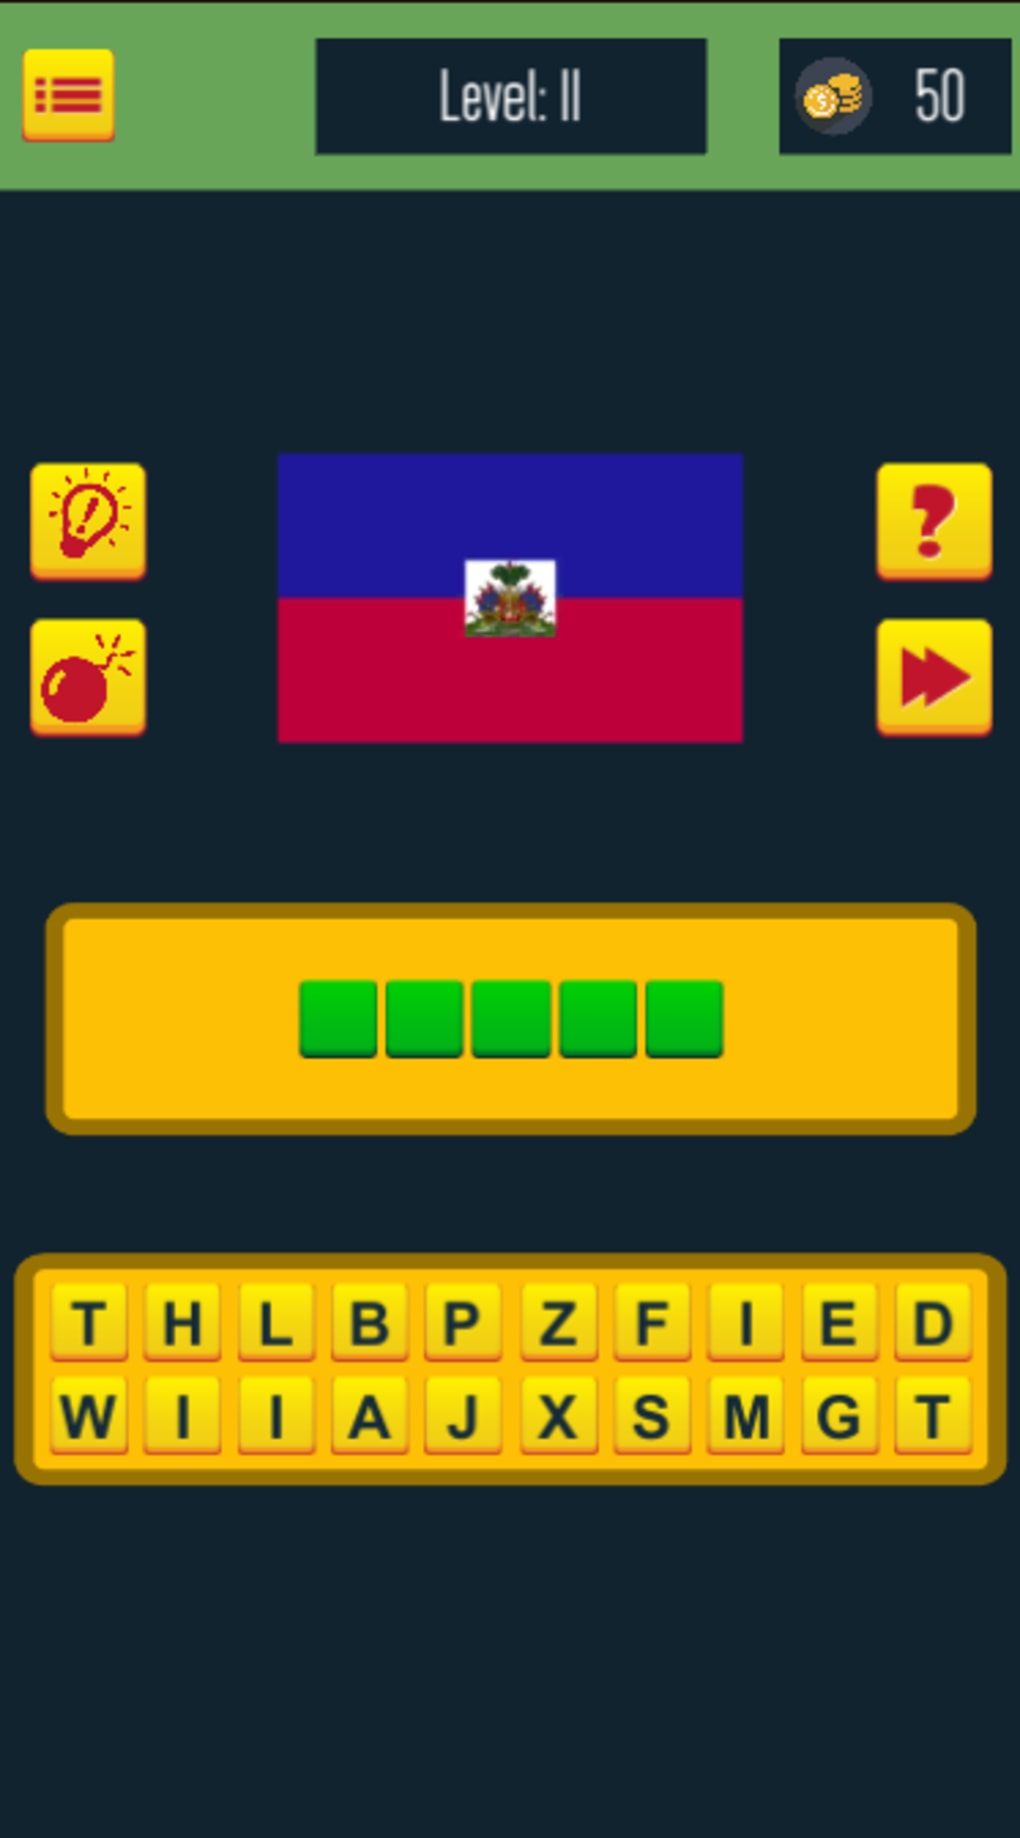 GitHub - edwardinubuntu/FlagQuizGame: The Flag Quiz Game app tests